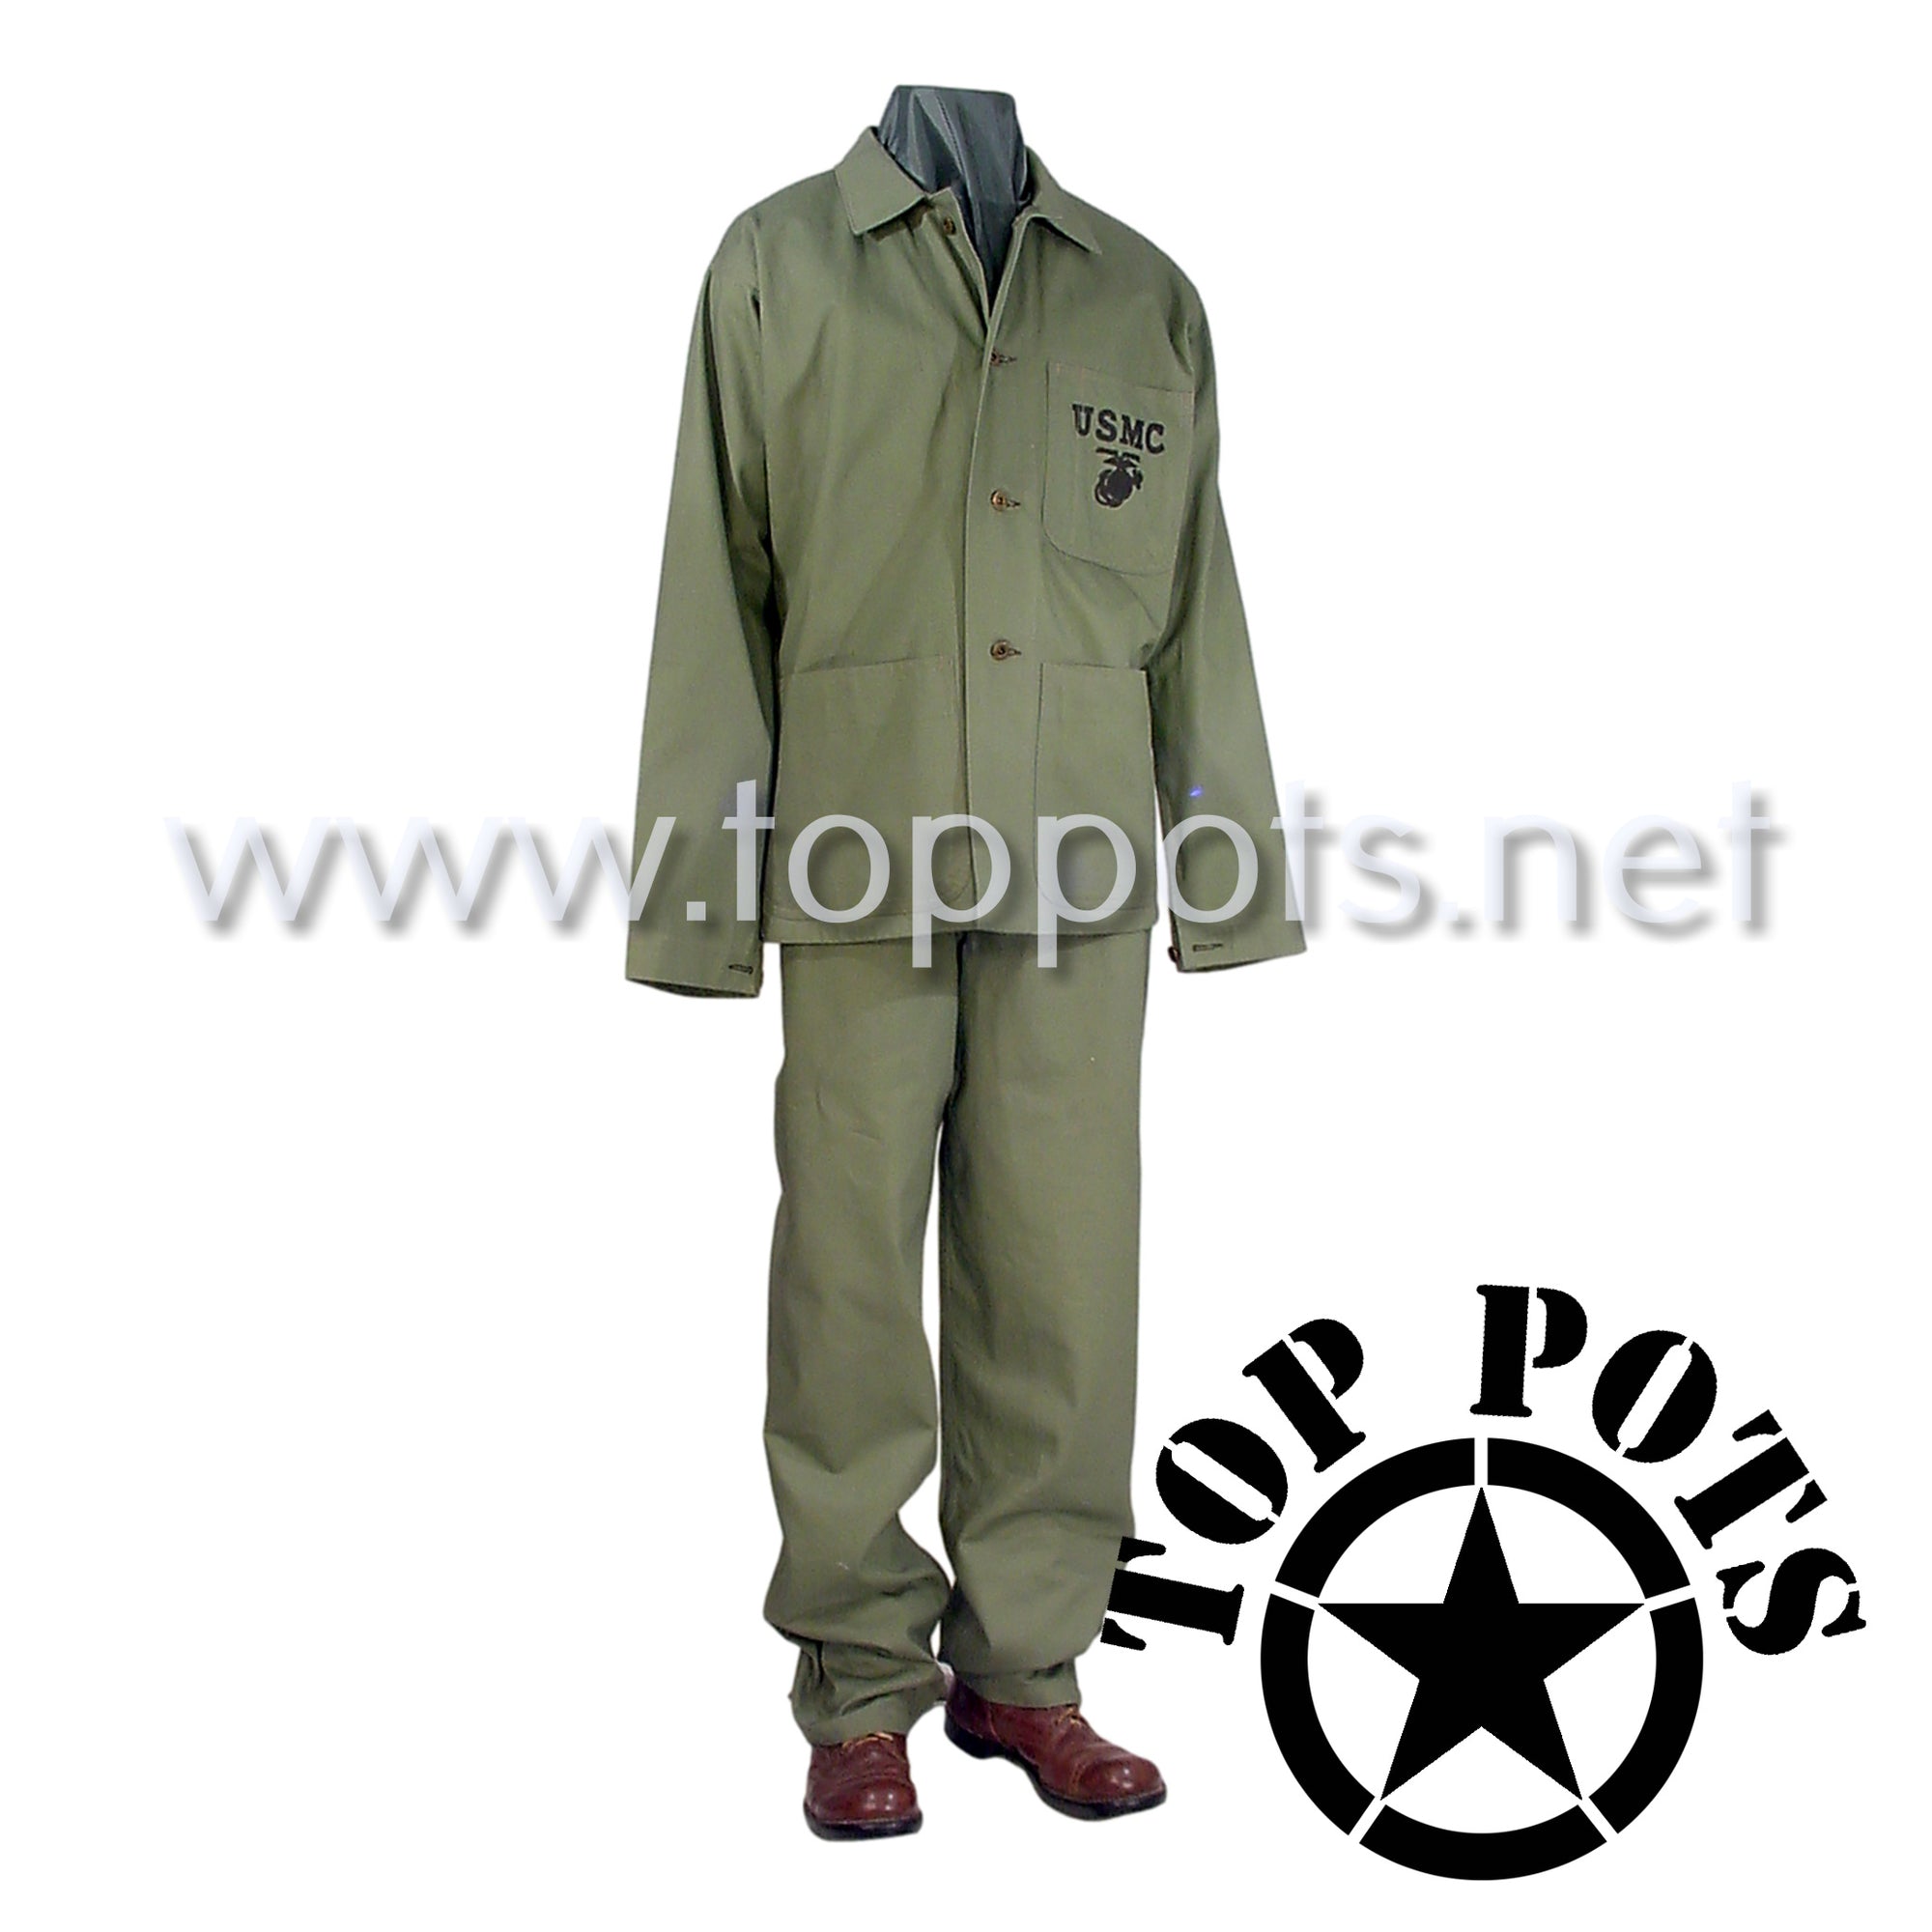 WWII USMC Reproduction M1941 P41 Cotton HBT Uniform Herring Bone Twill Olive Drab Field Utility Fatigue Jacket & Pant Set (Jacket and Pants)